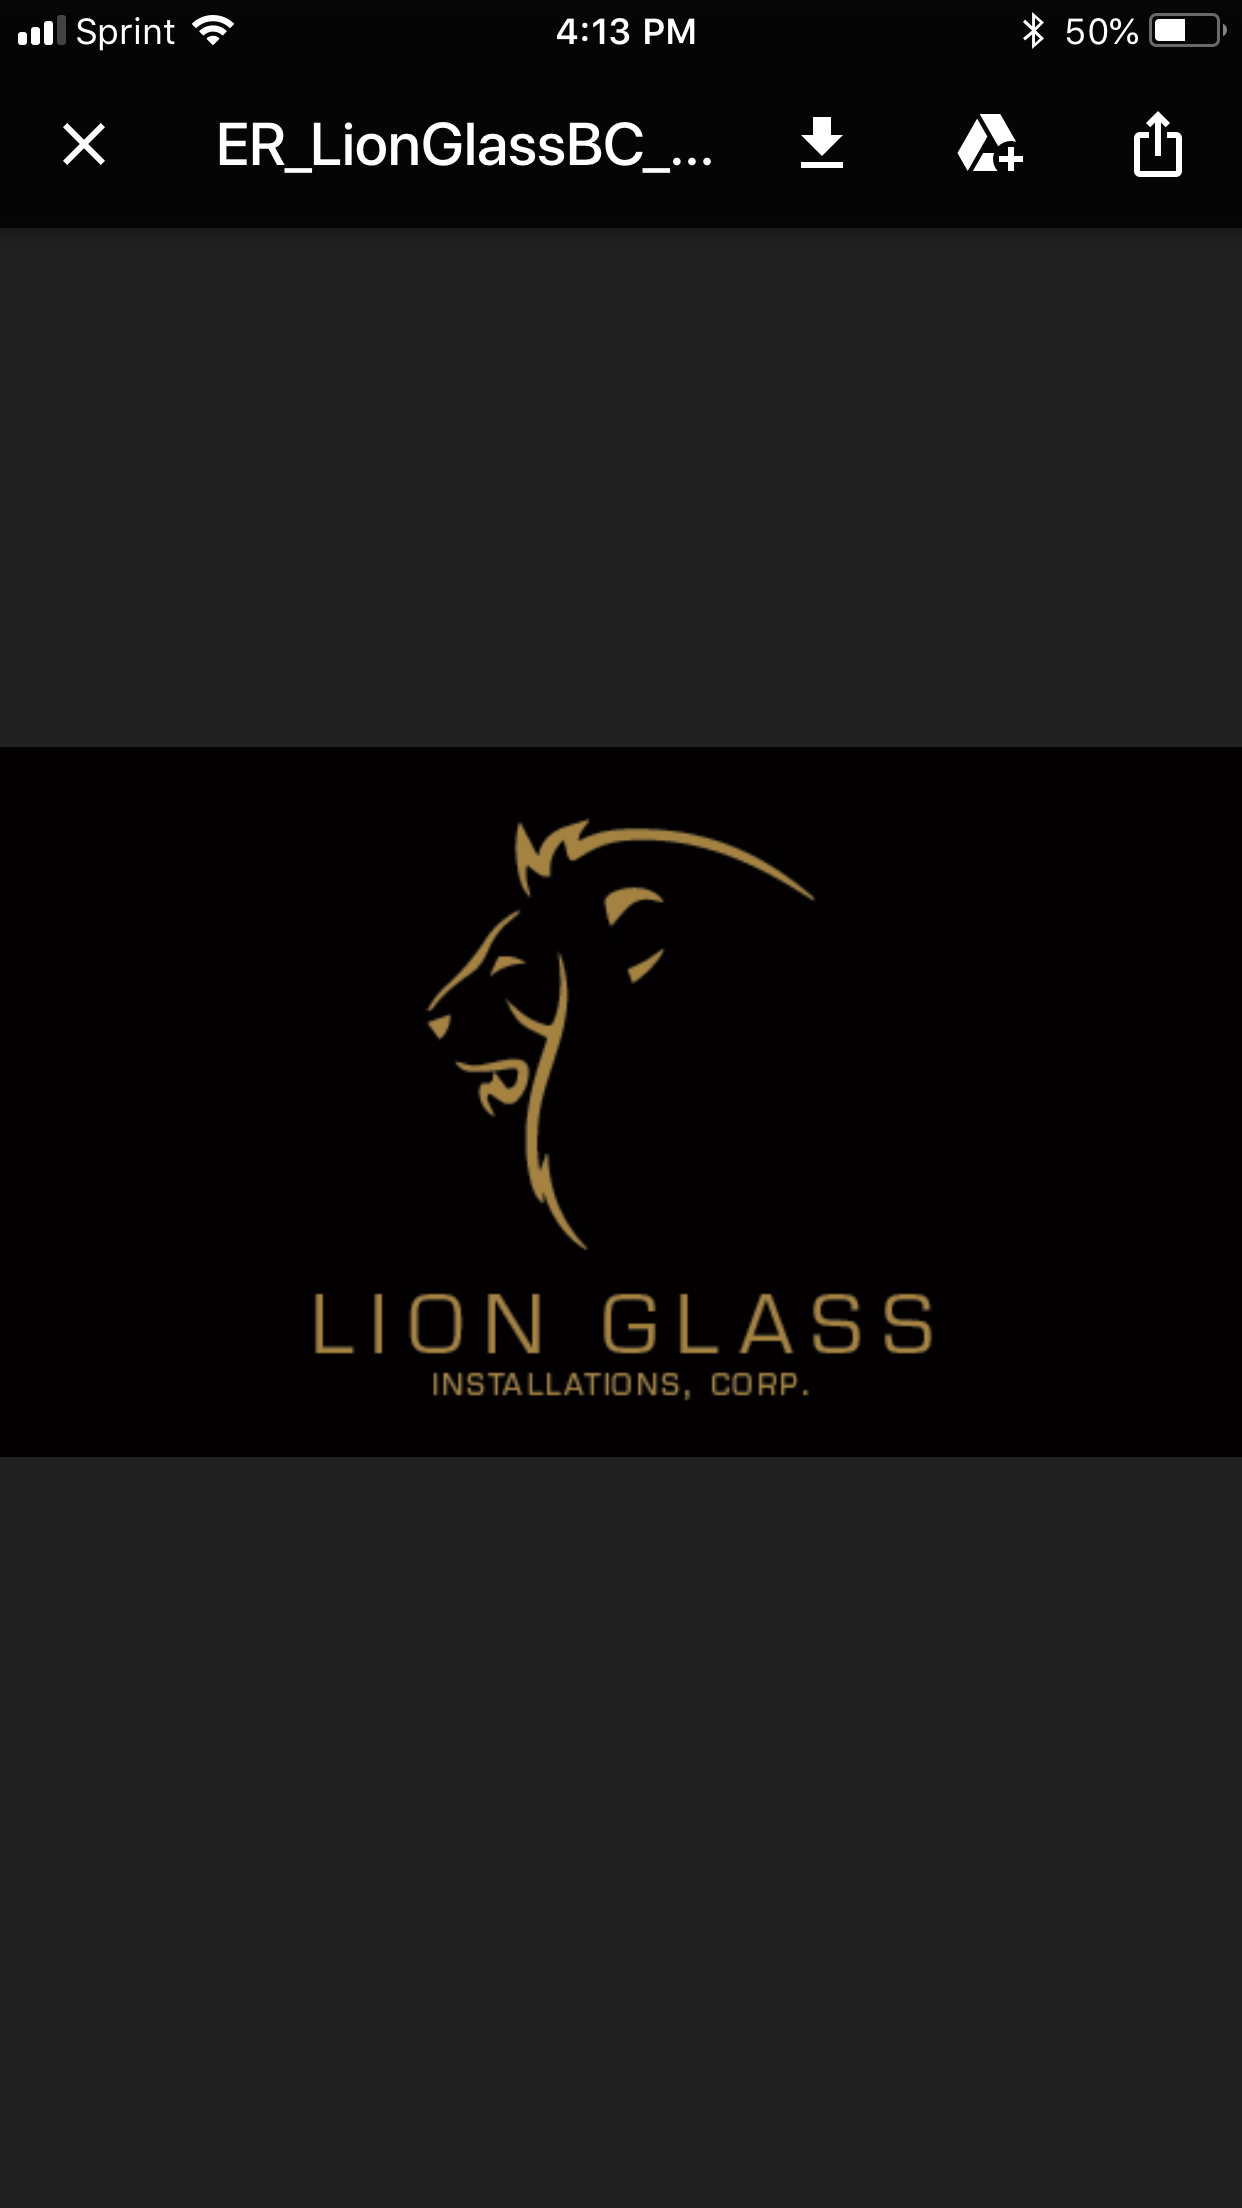 Lion Glass Installations, Corp. Logo